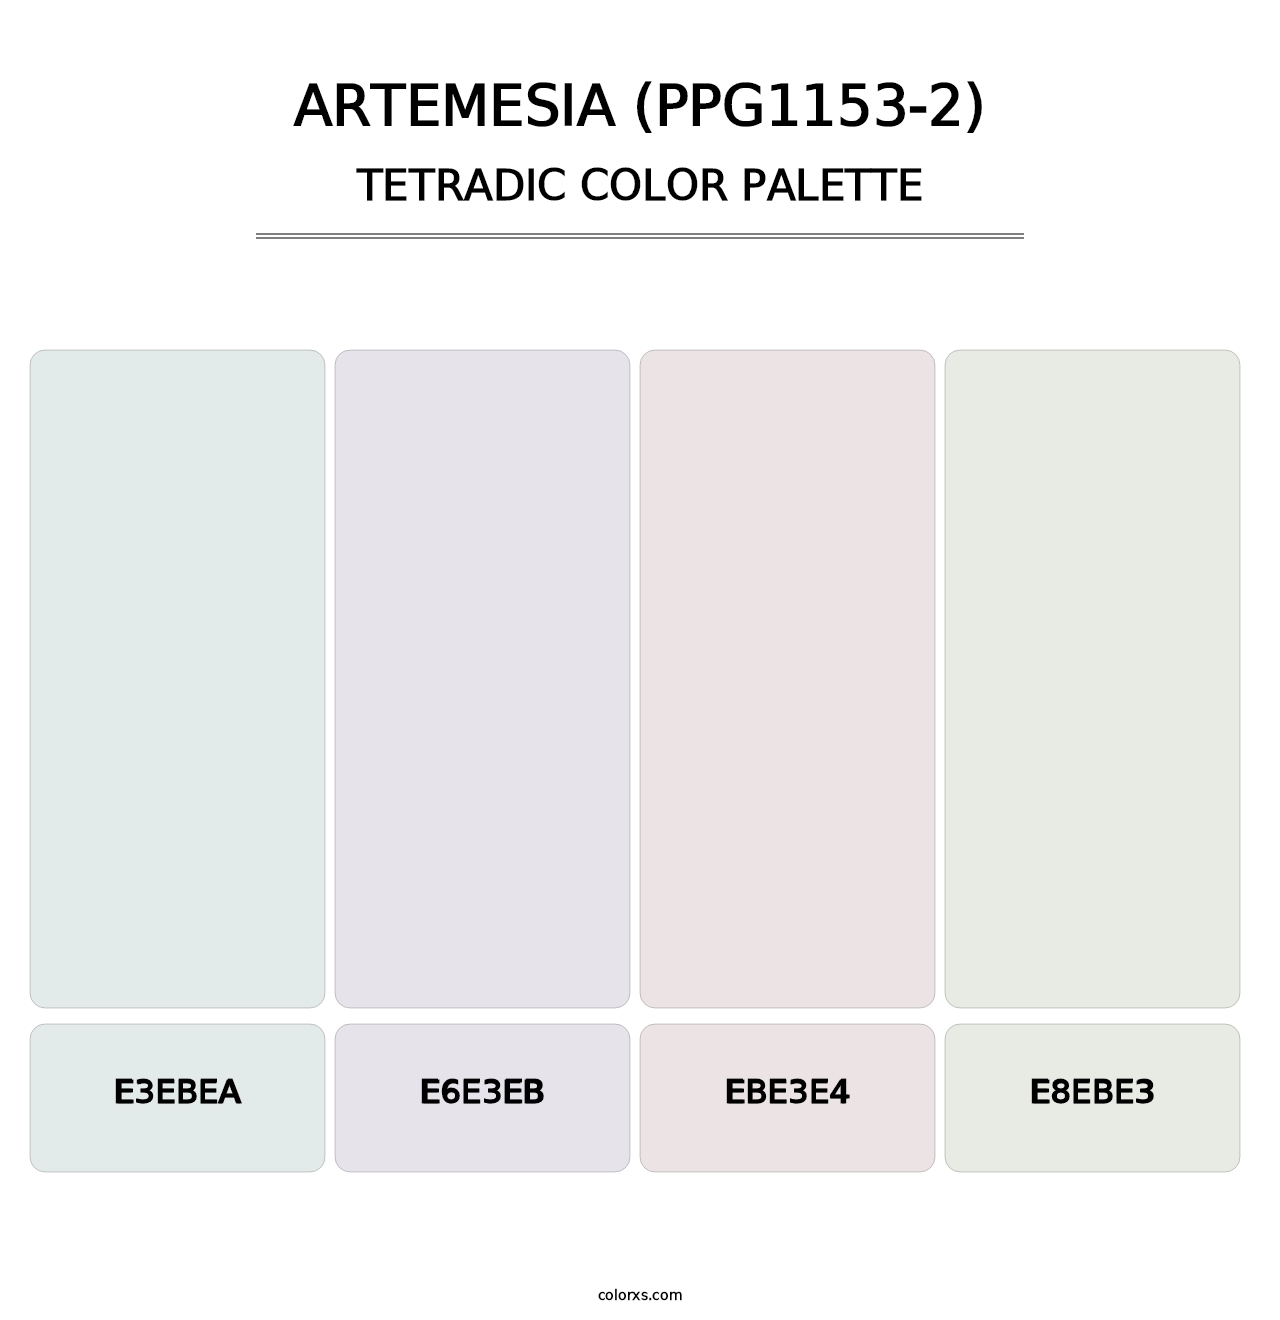 Artemesia (PPG1153-2) - Tetradic Color Palette